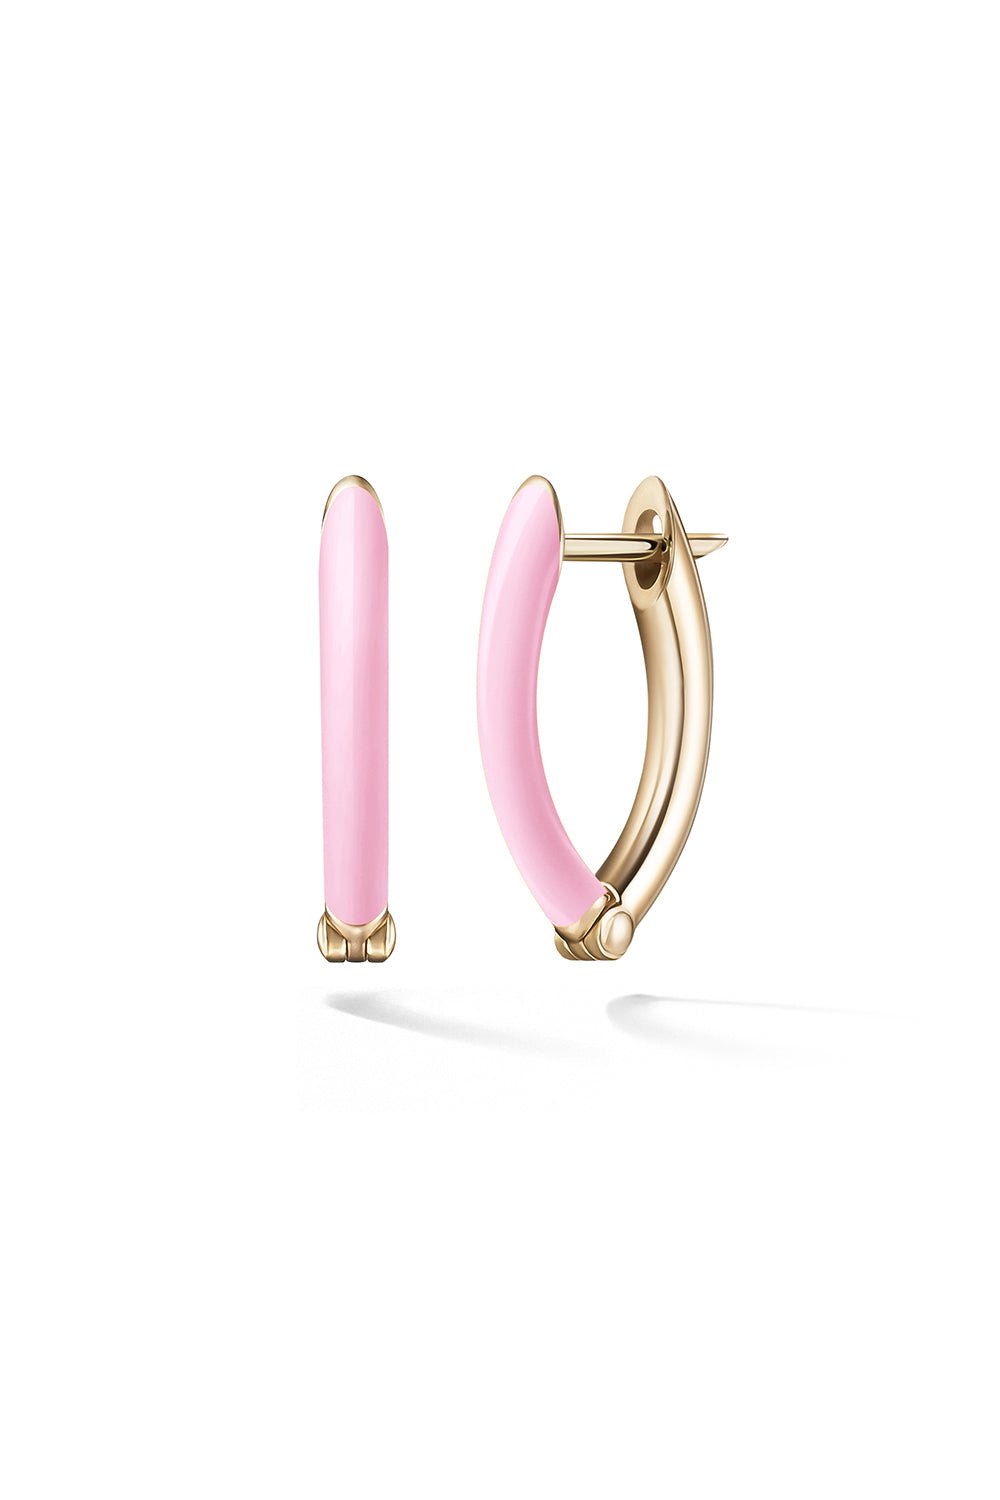 MELISSA KAYE-Marissa Pink Small Cristina Earrings-YELLOW GOLD